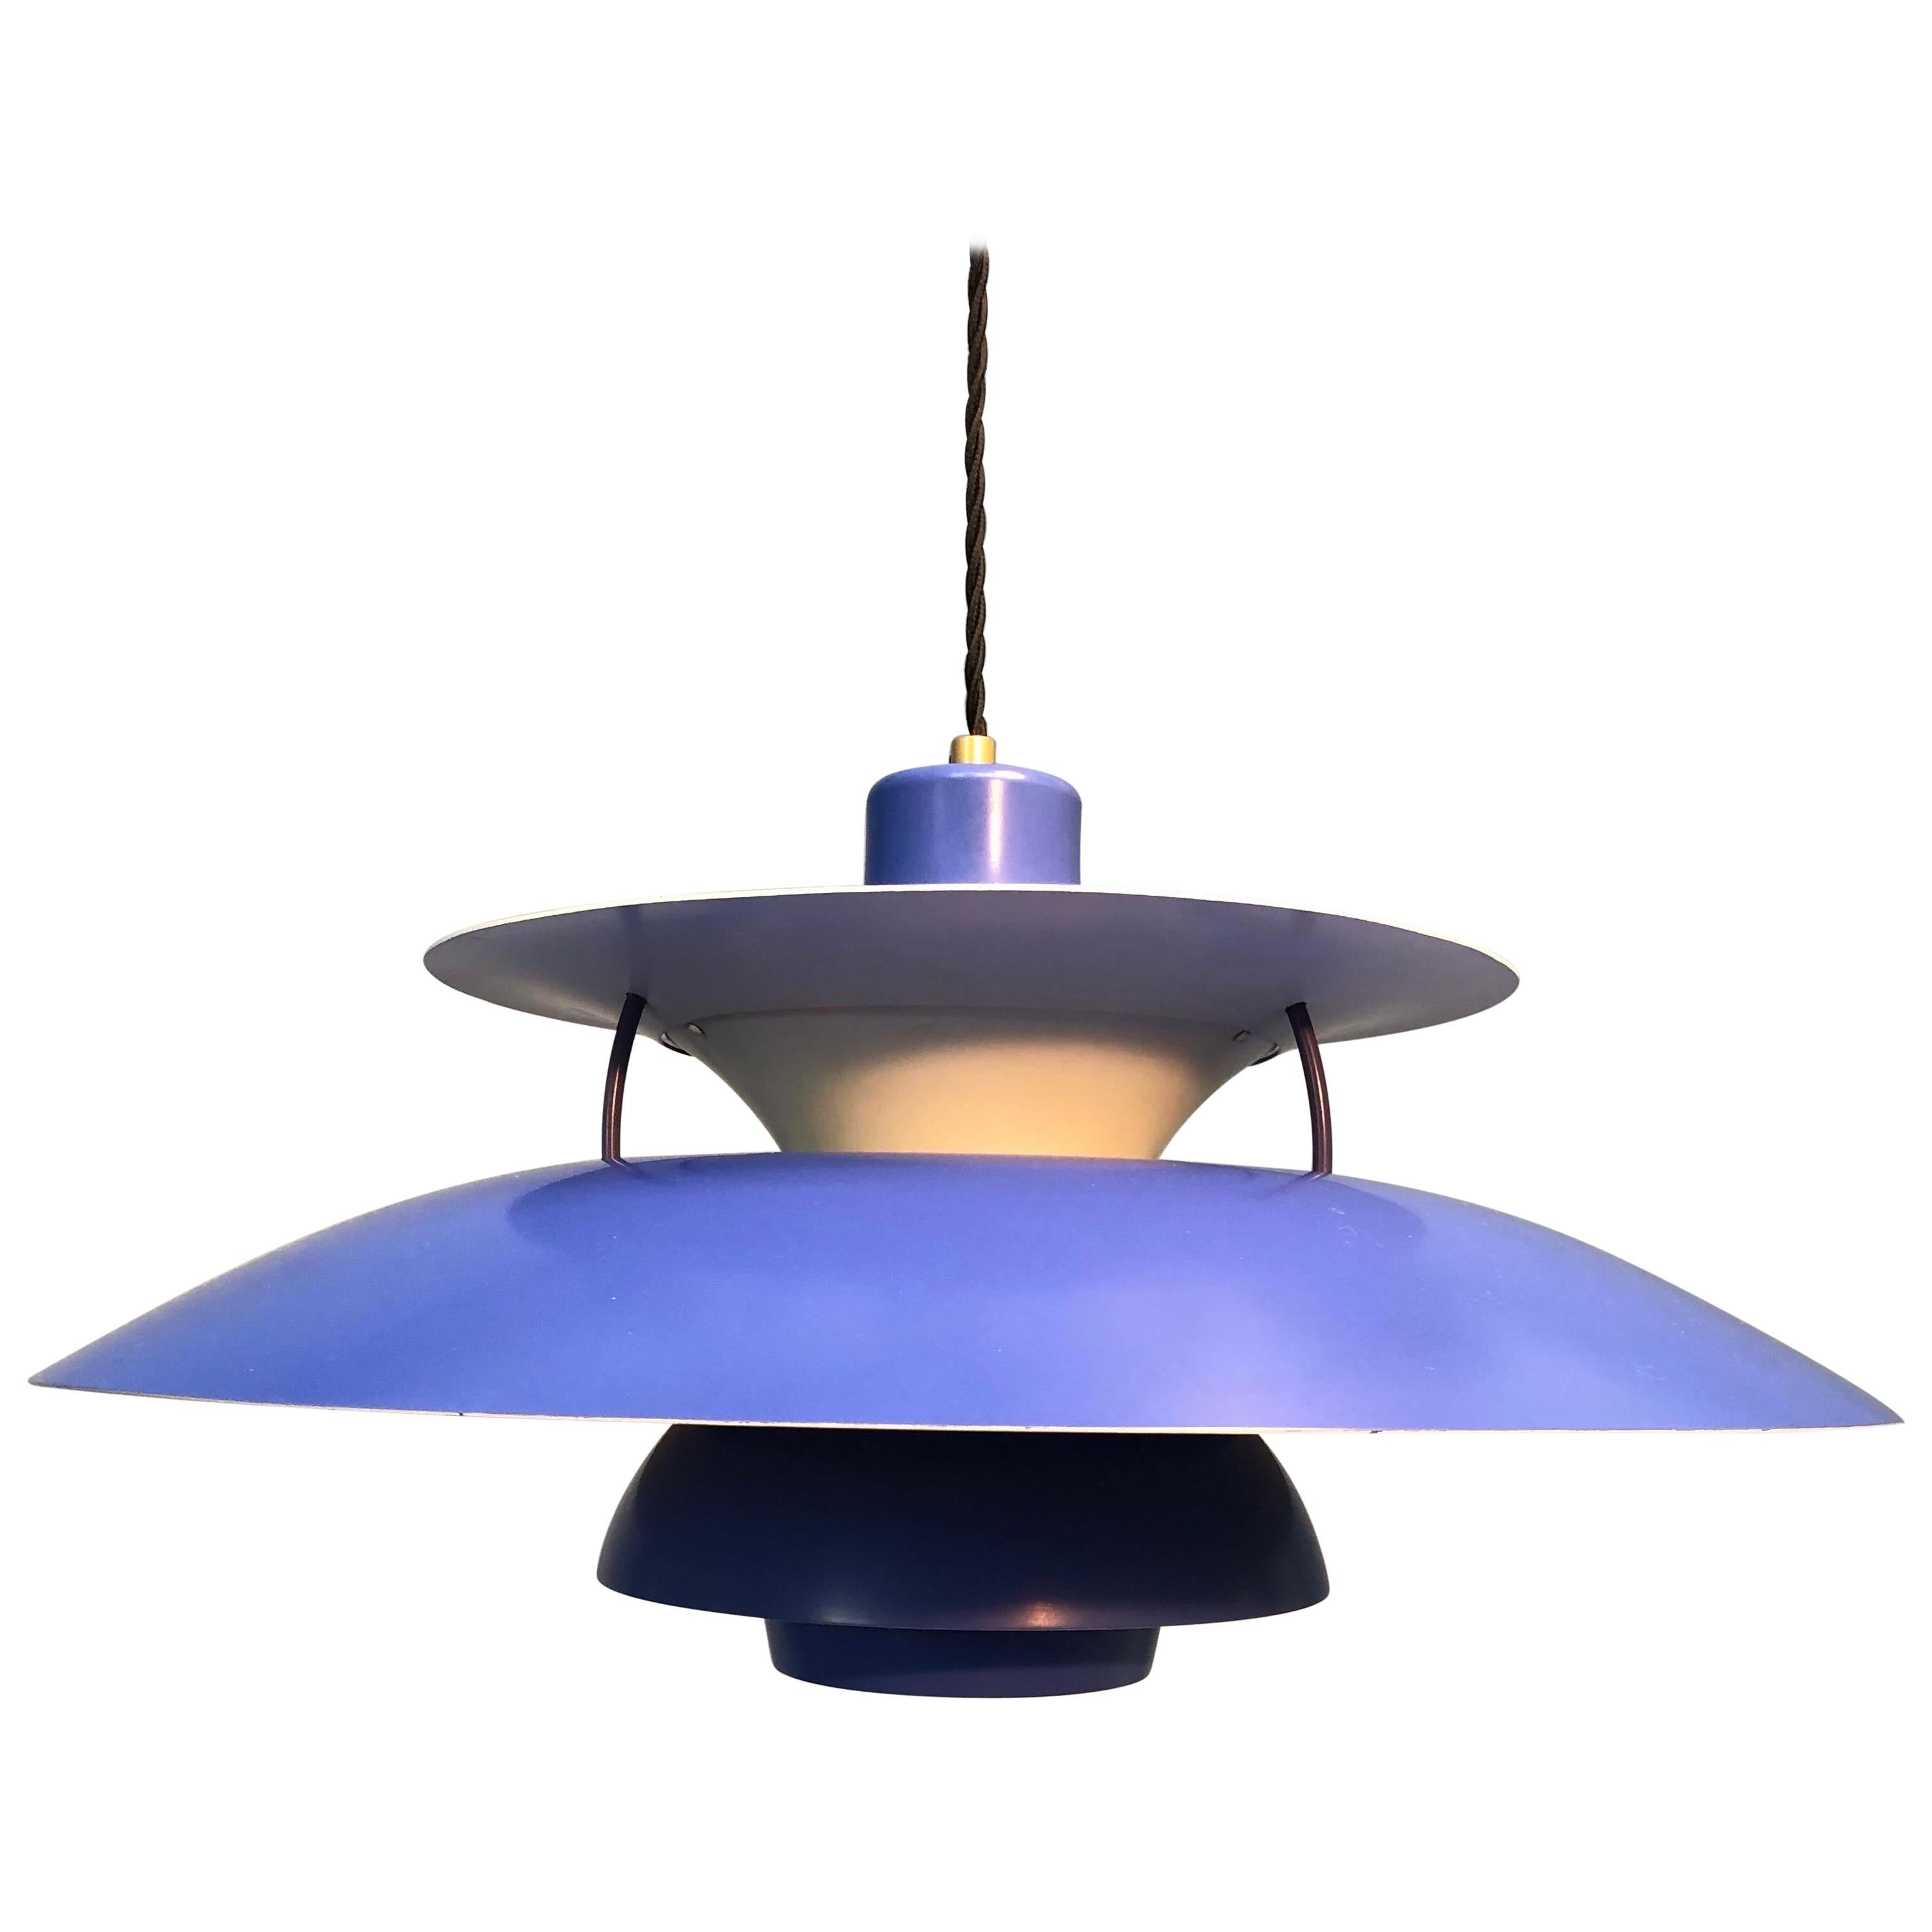 Iconic Vintage Poul Henningsen PH 5 Chandelier Pendant Lamp from 1959